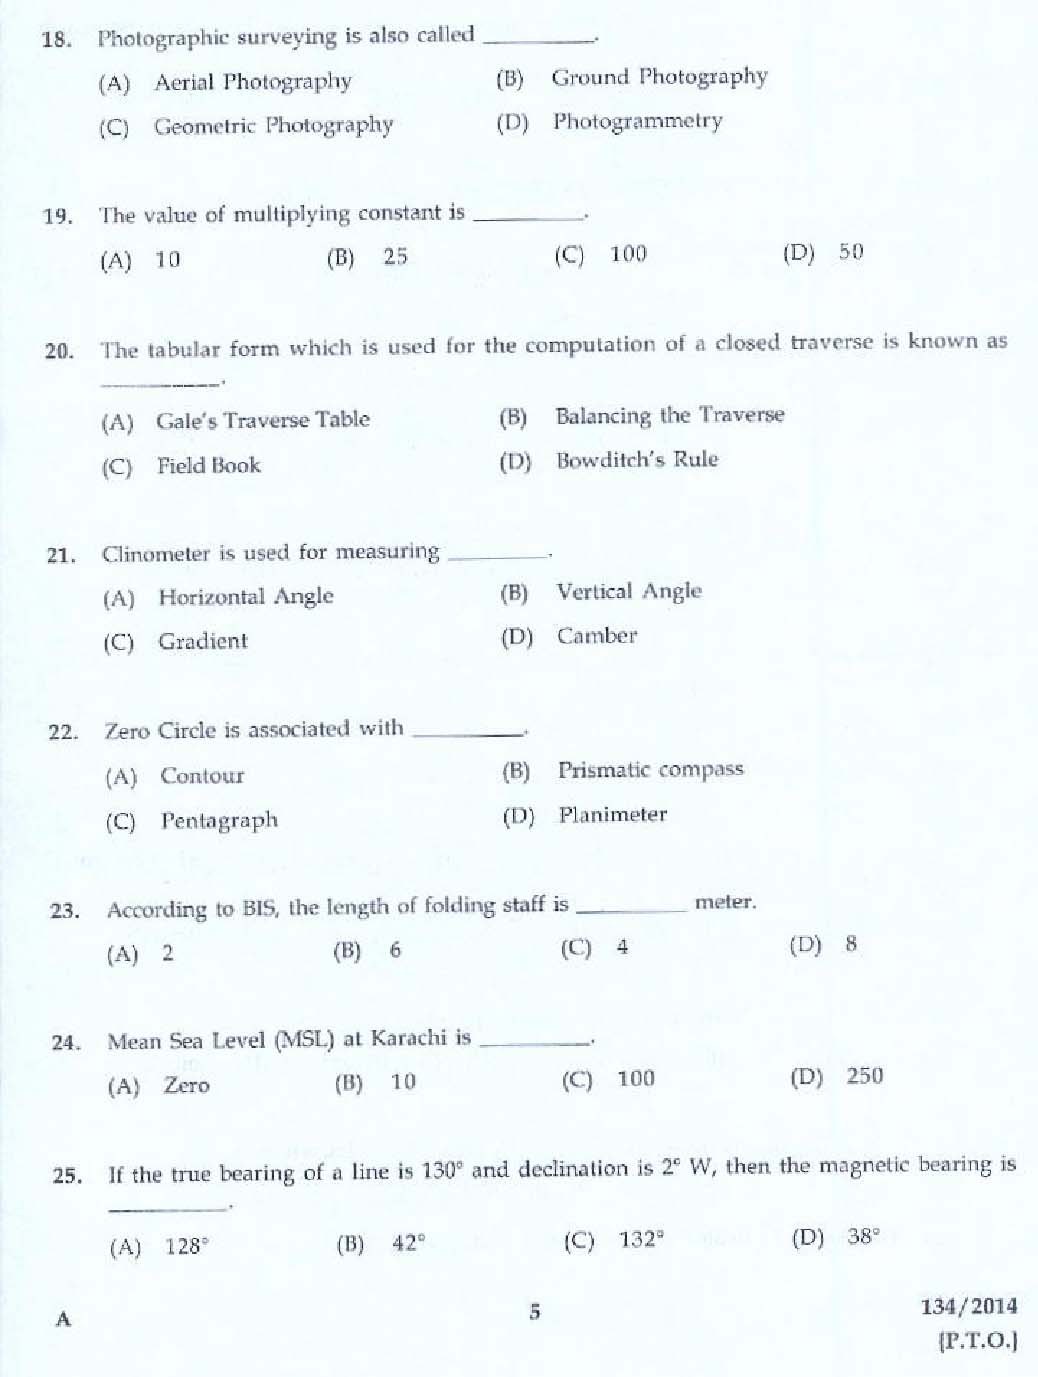 Kerala PSC Work Superintendent Exam Code 1342014 3